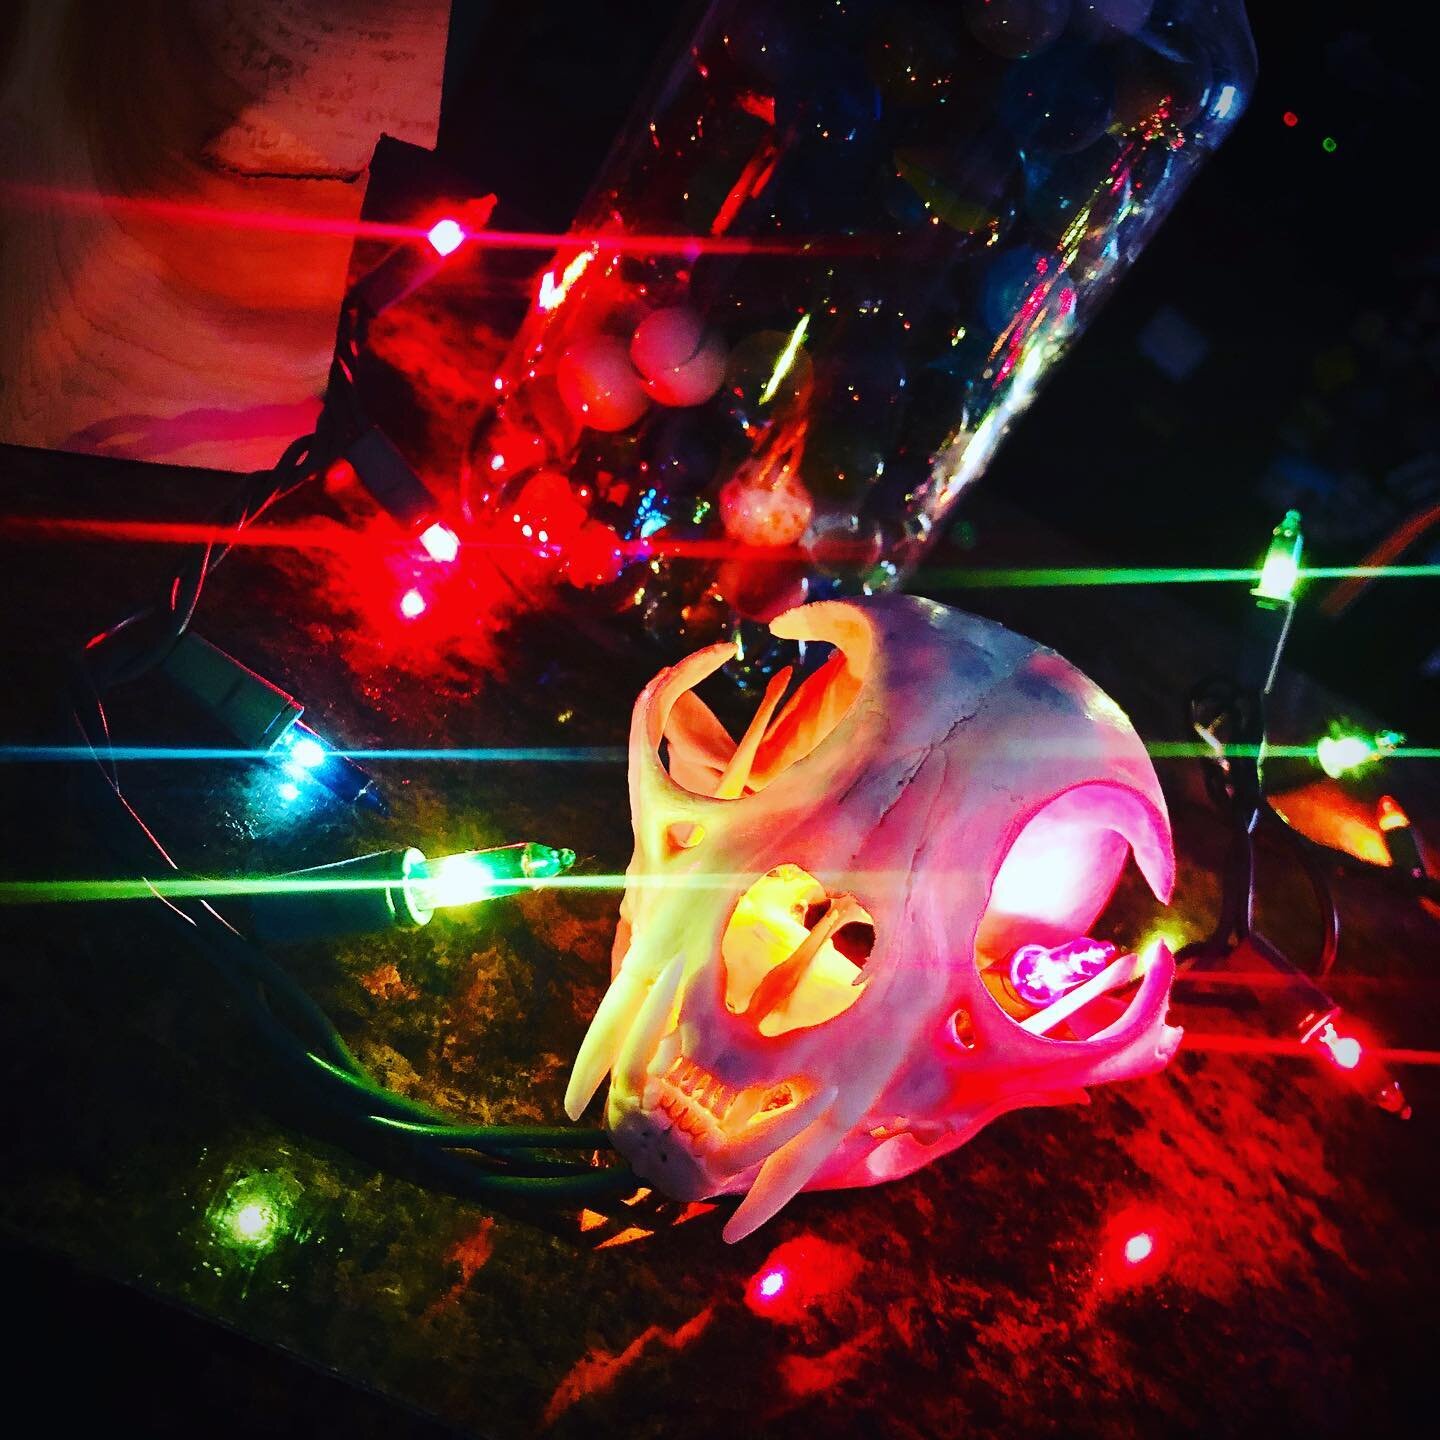 Christmas lights are up! #skulldecor #iloveskulls #bobcatskull #christmaslights #happyholidays2019 #decoratehowyouwant #vultureculture #bonecollector #boneartist #skullartist #loveofskulls #glassmarbles #antiques #antiquemarbles #oddities #odddecor